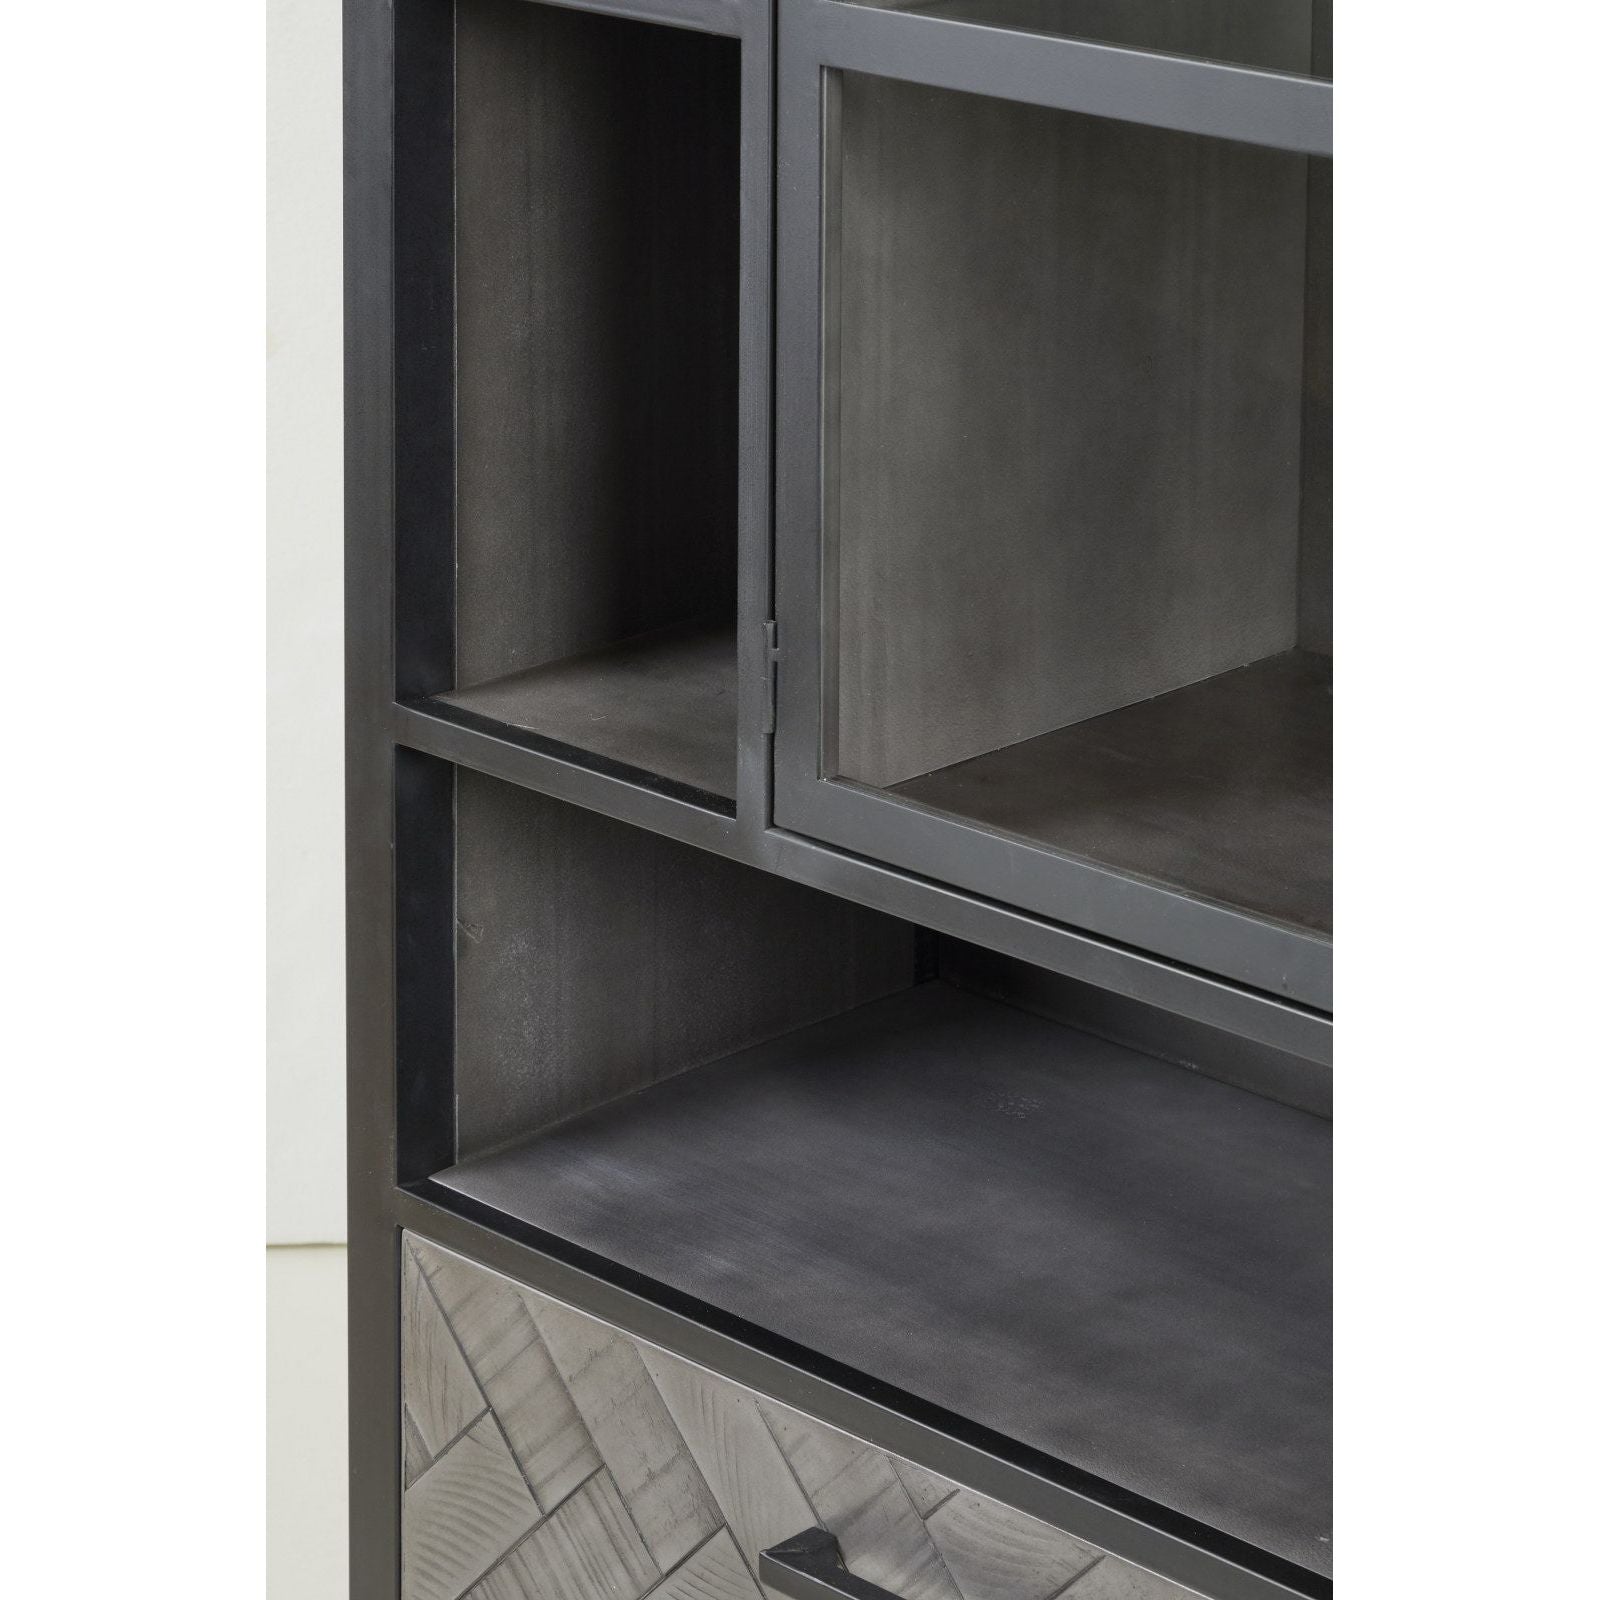 Display cabinet | Furniture series Micras | Dark gray, black | 110